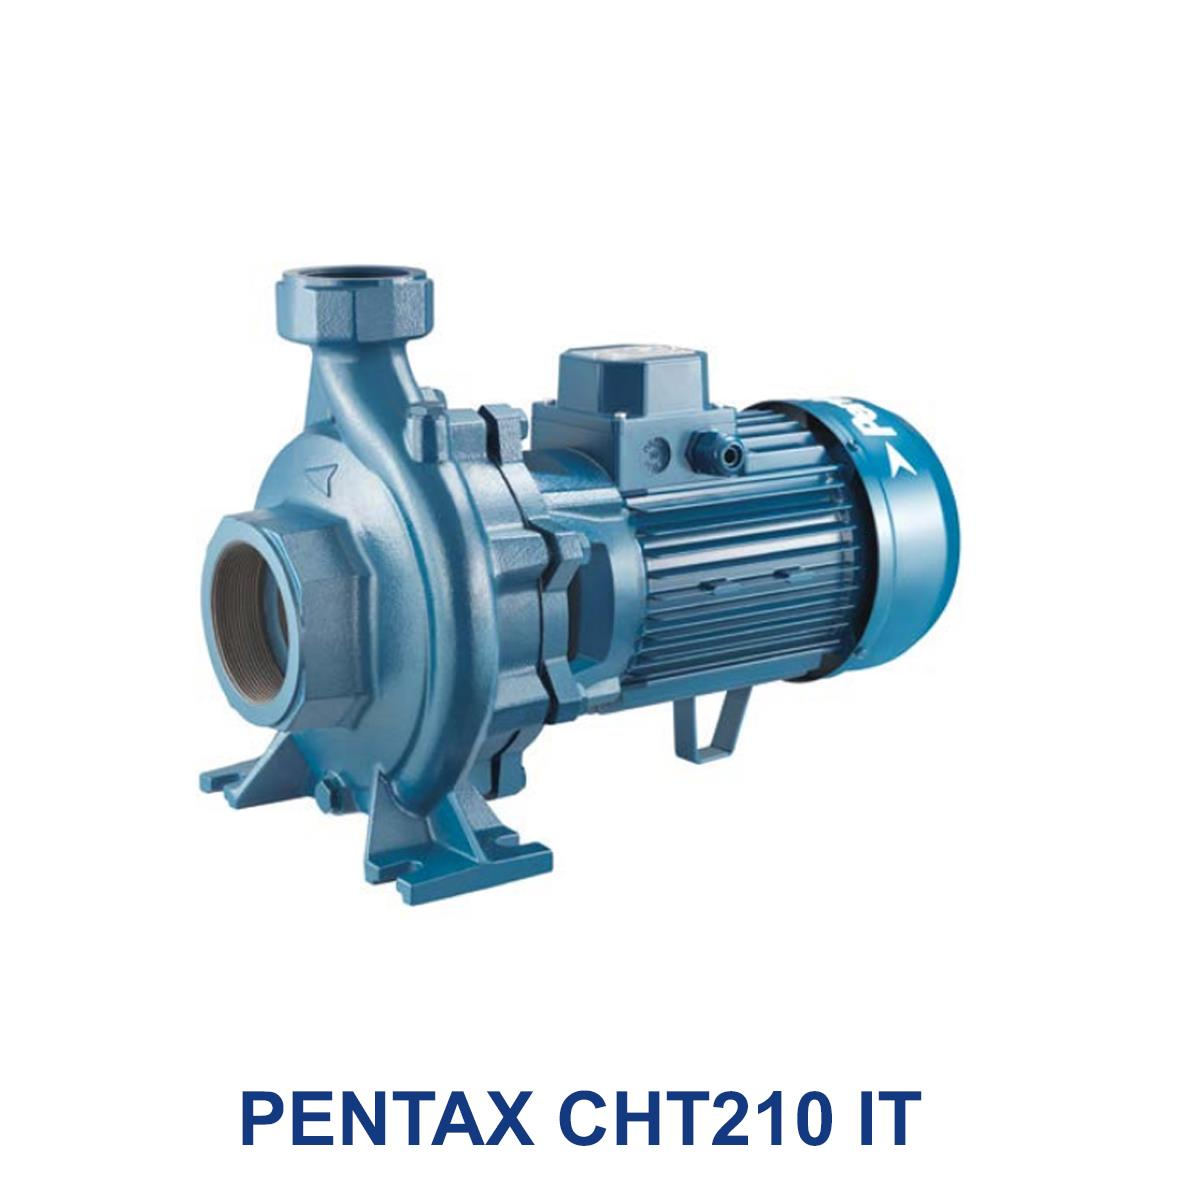 PENTAX-CHT210-IT